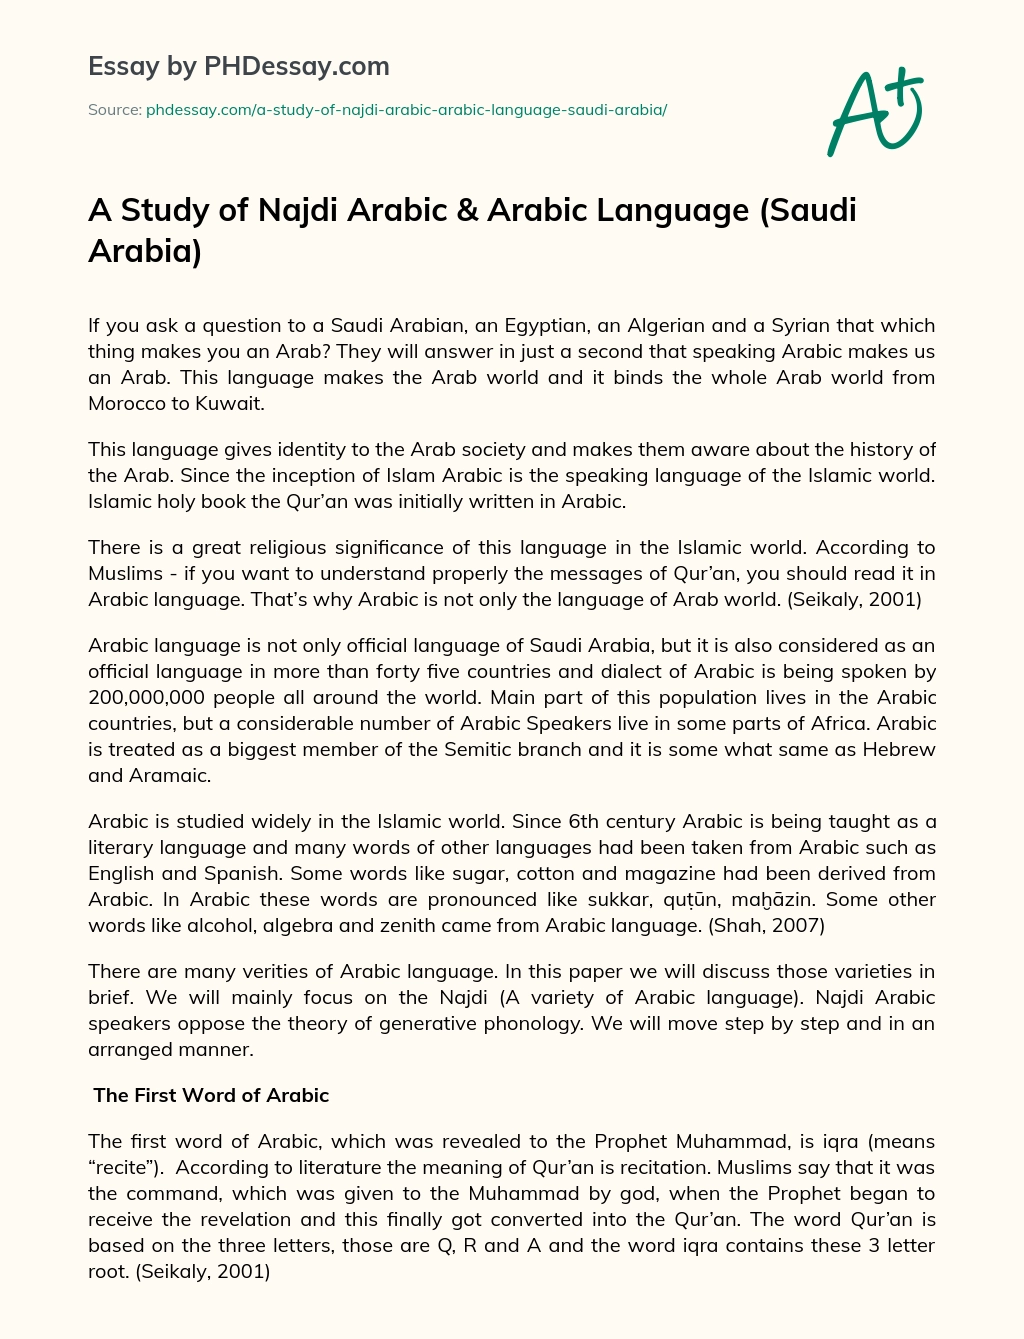 A Study of Najdi Arabic & Arabic Language (Saudi Arabia) essay